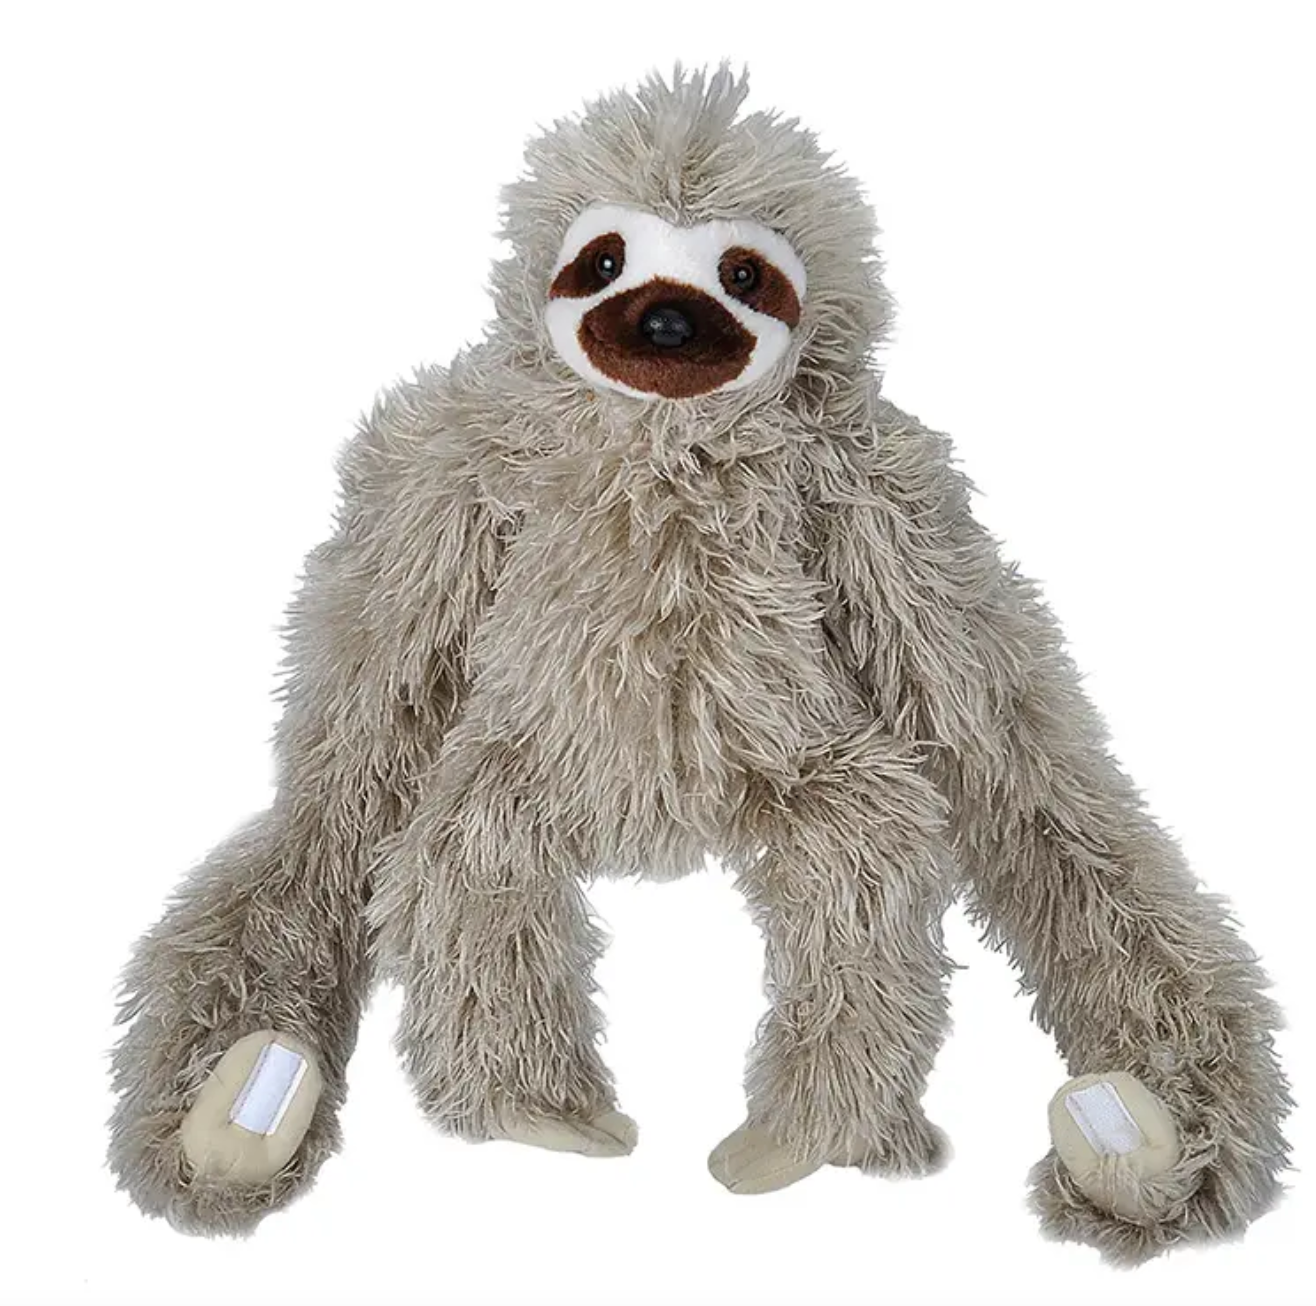 Hanging Sloth Stuffed Animal 20"